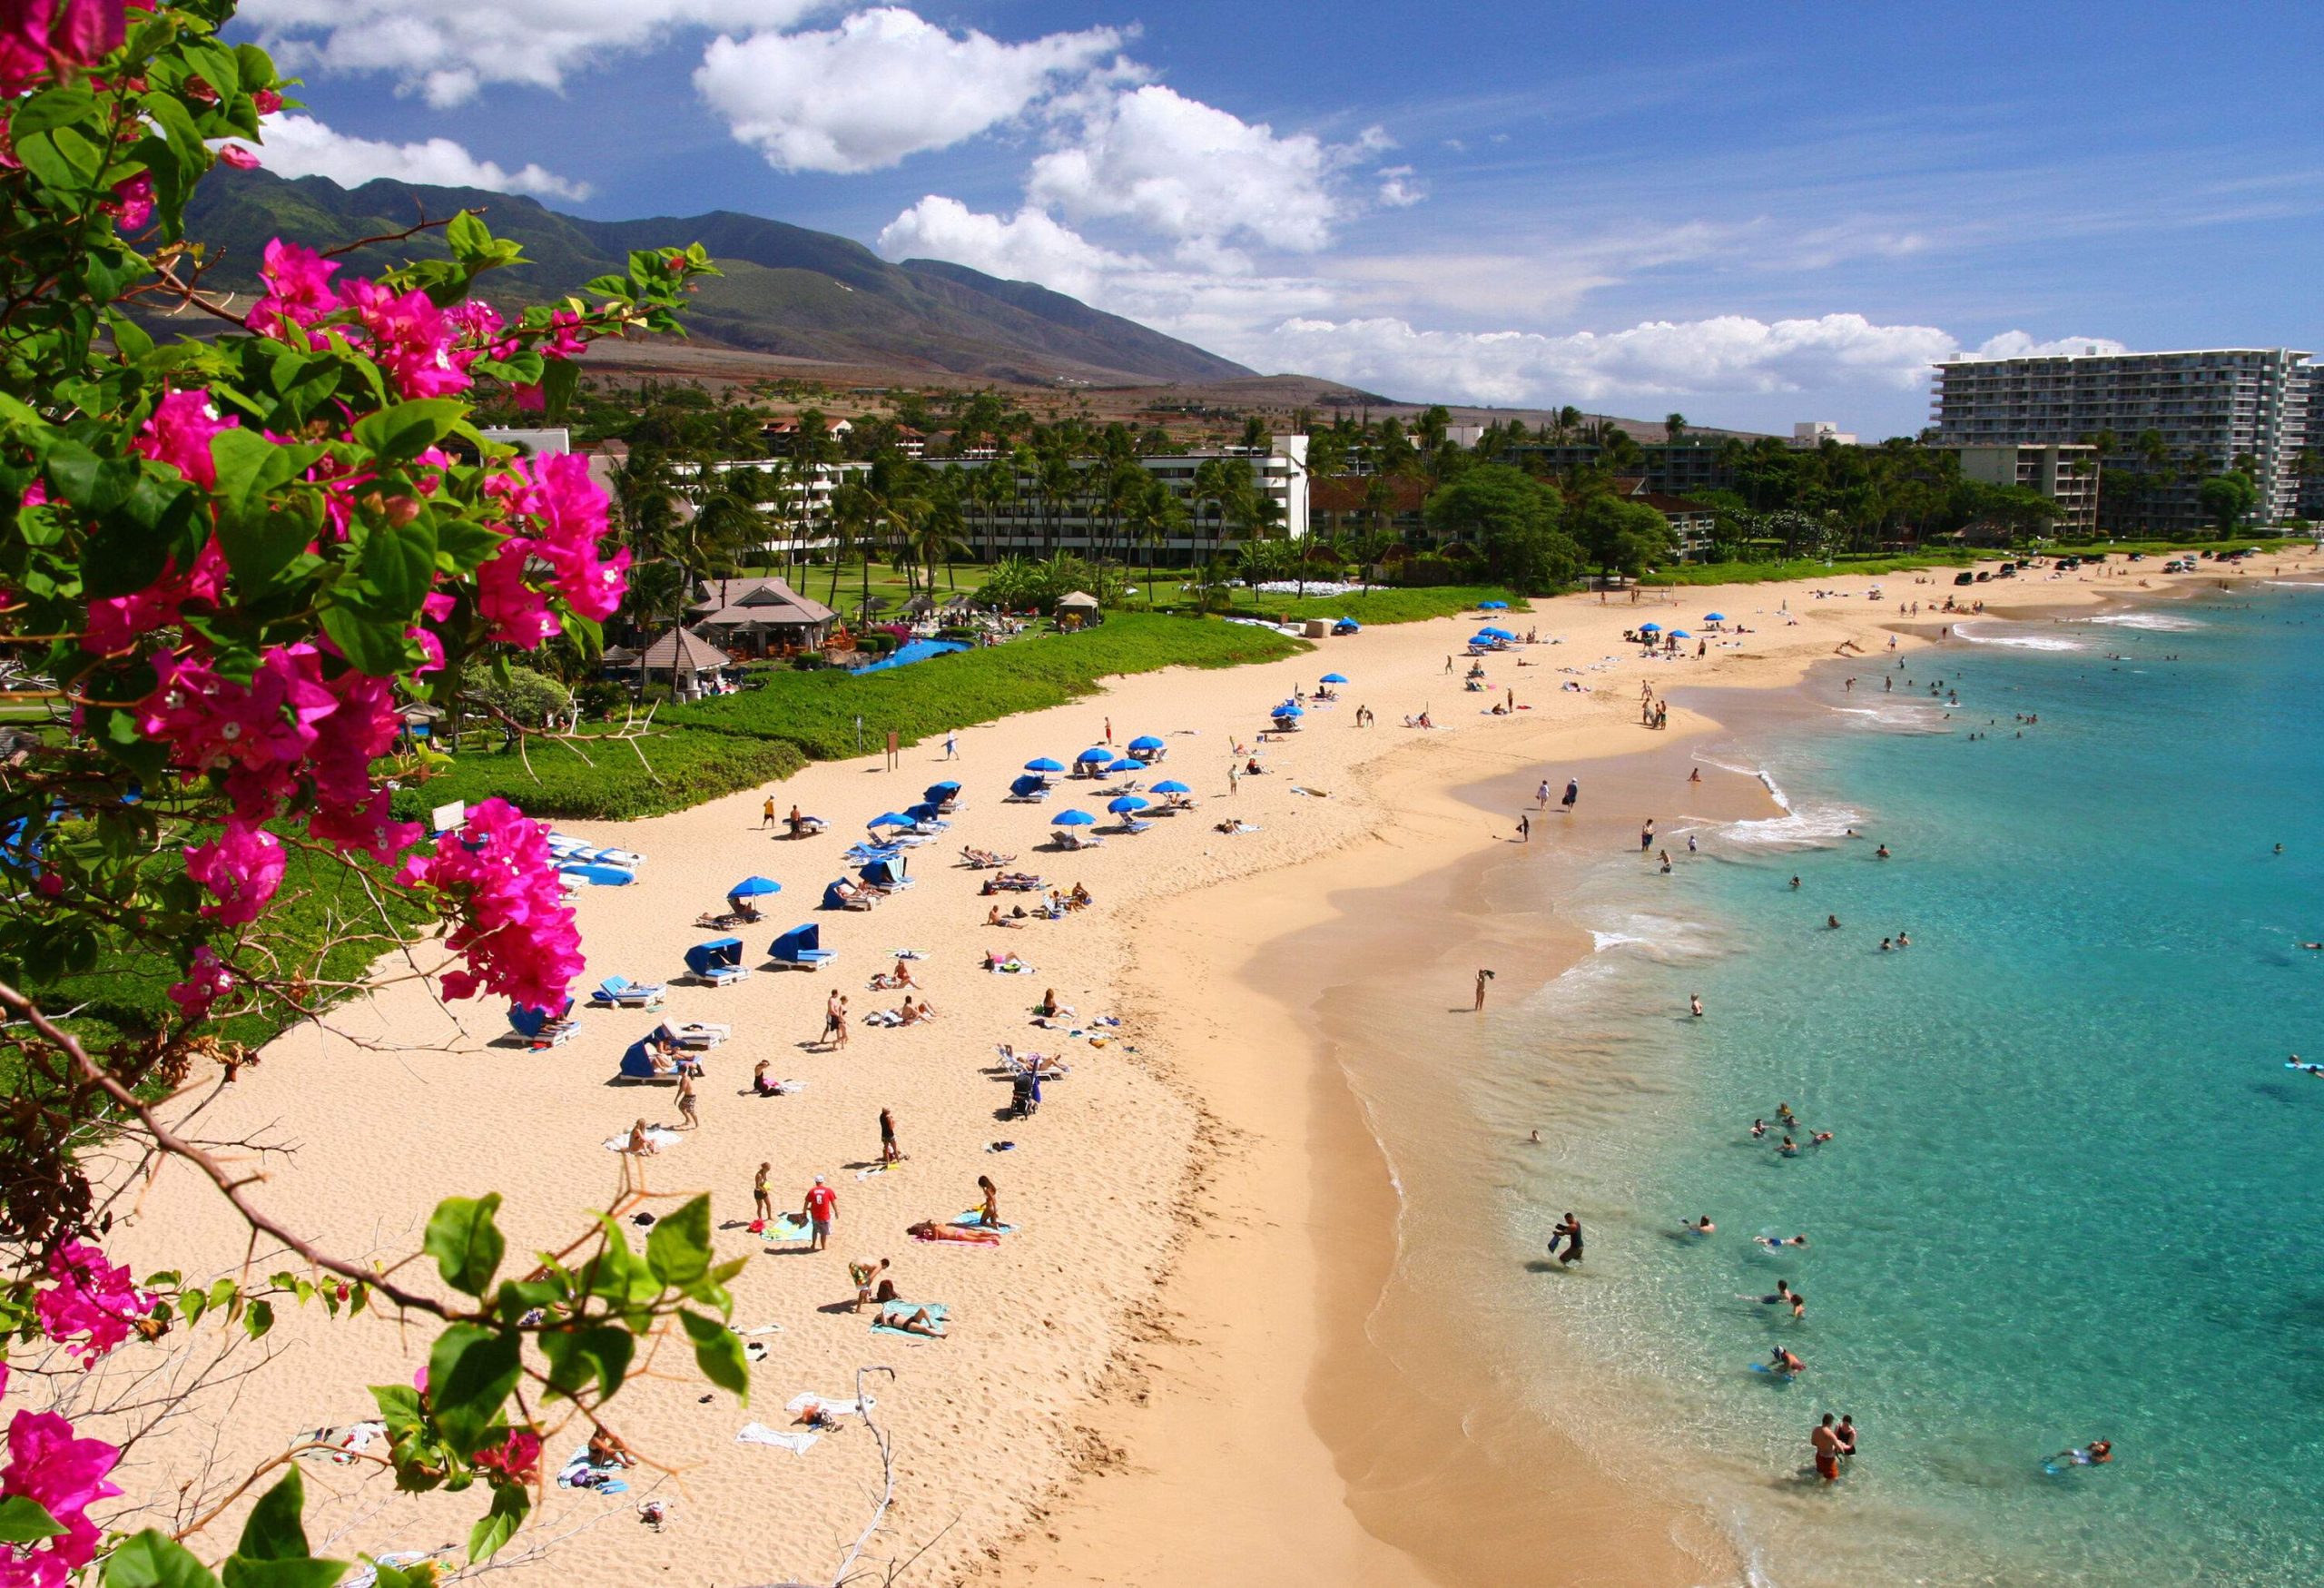 Каанапали Мауи Гавайи. Пляж Каанапали - Мауи. Гавайи пляжи Мауи. Maui остров Гавайи. Its beach beach beach